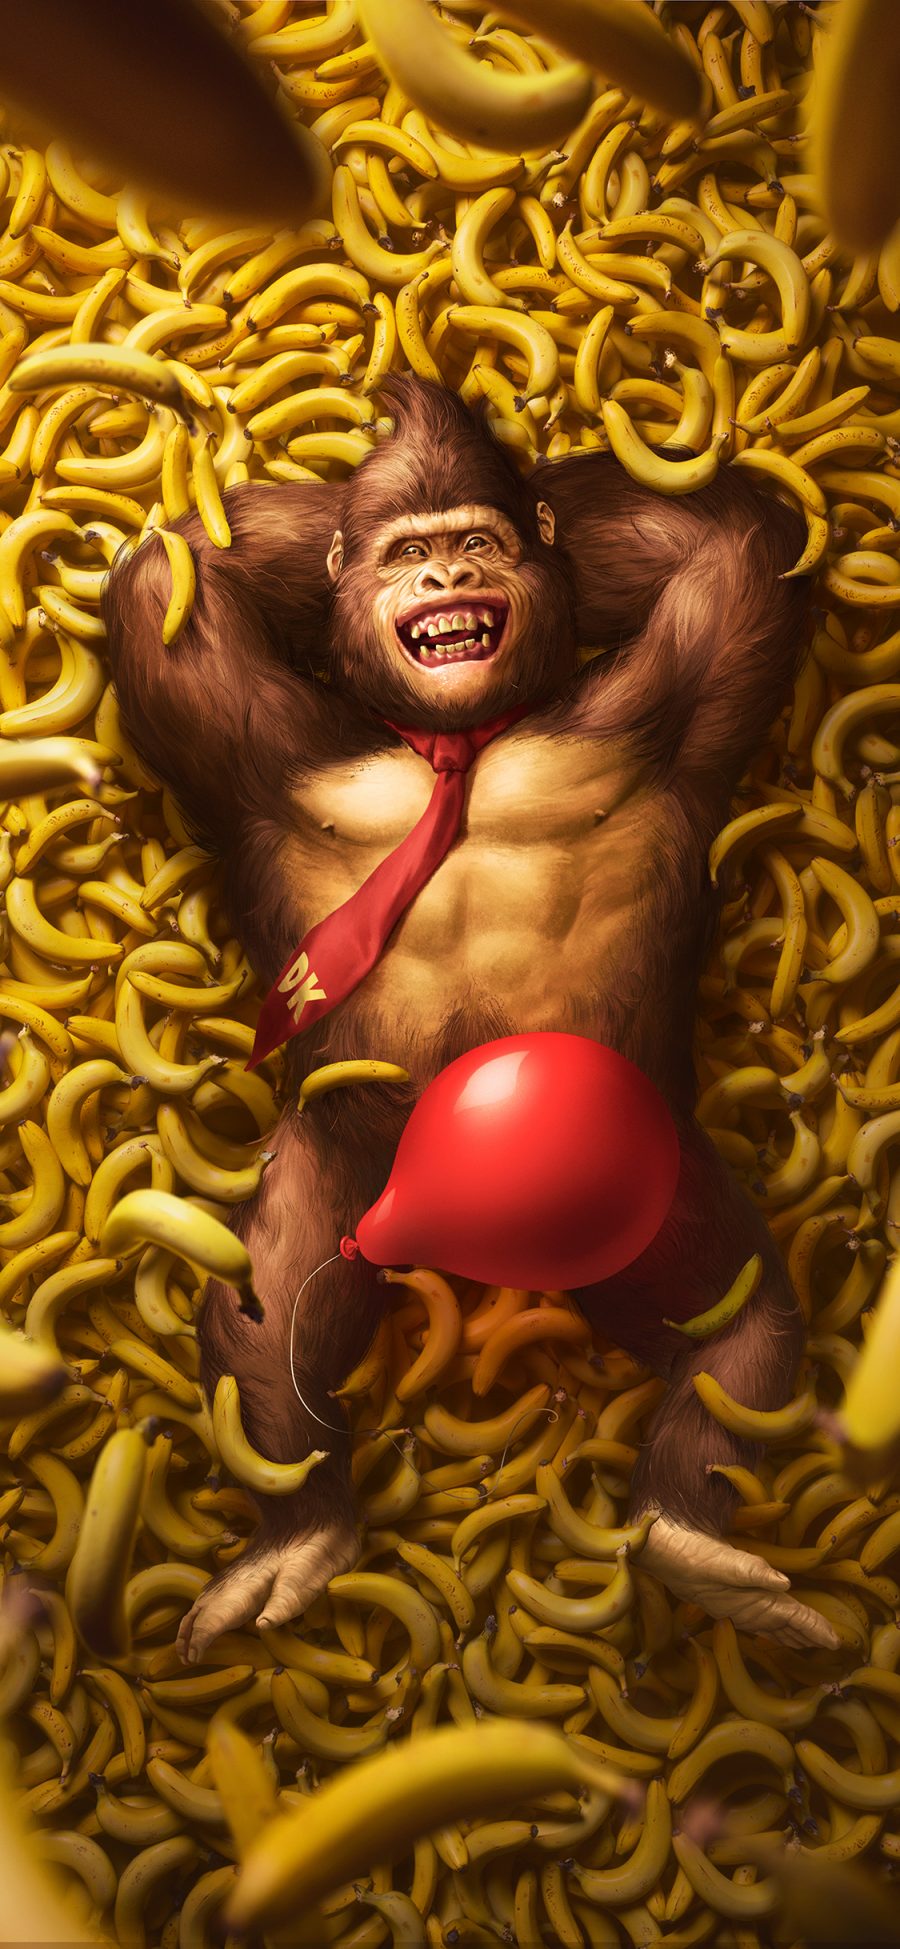 [2436×1125]3D 猩猩 香蕉 气球 苹果手机动漫壁纸图片